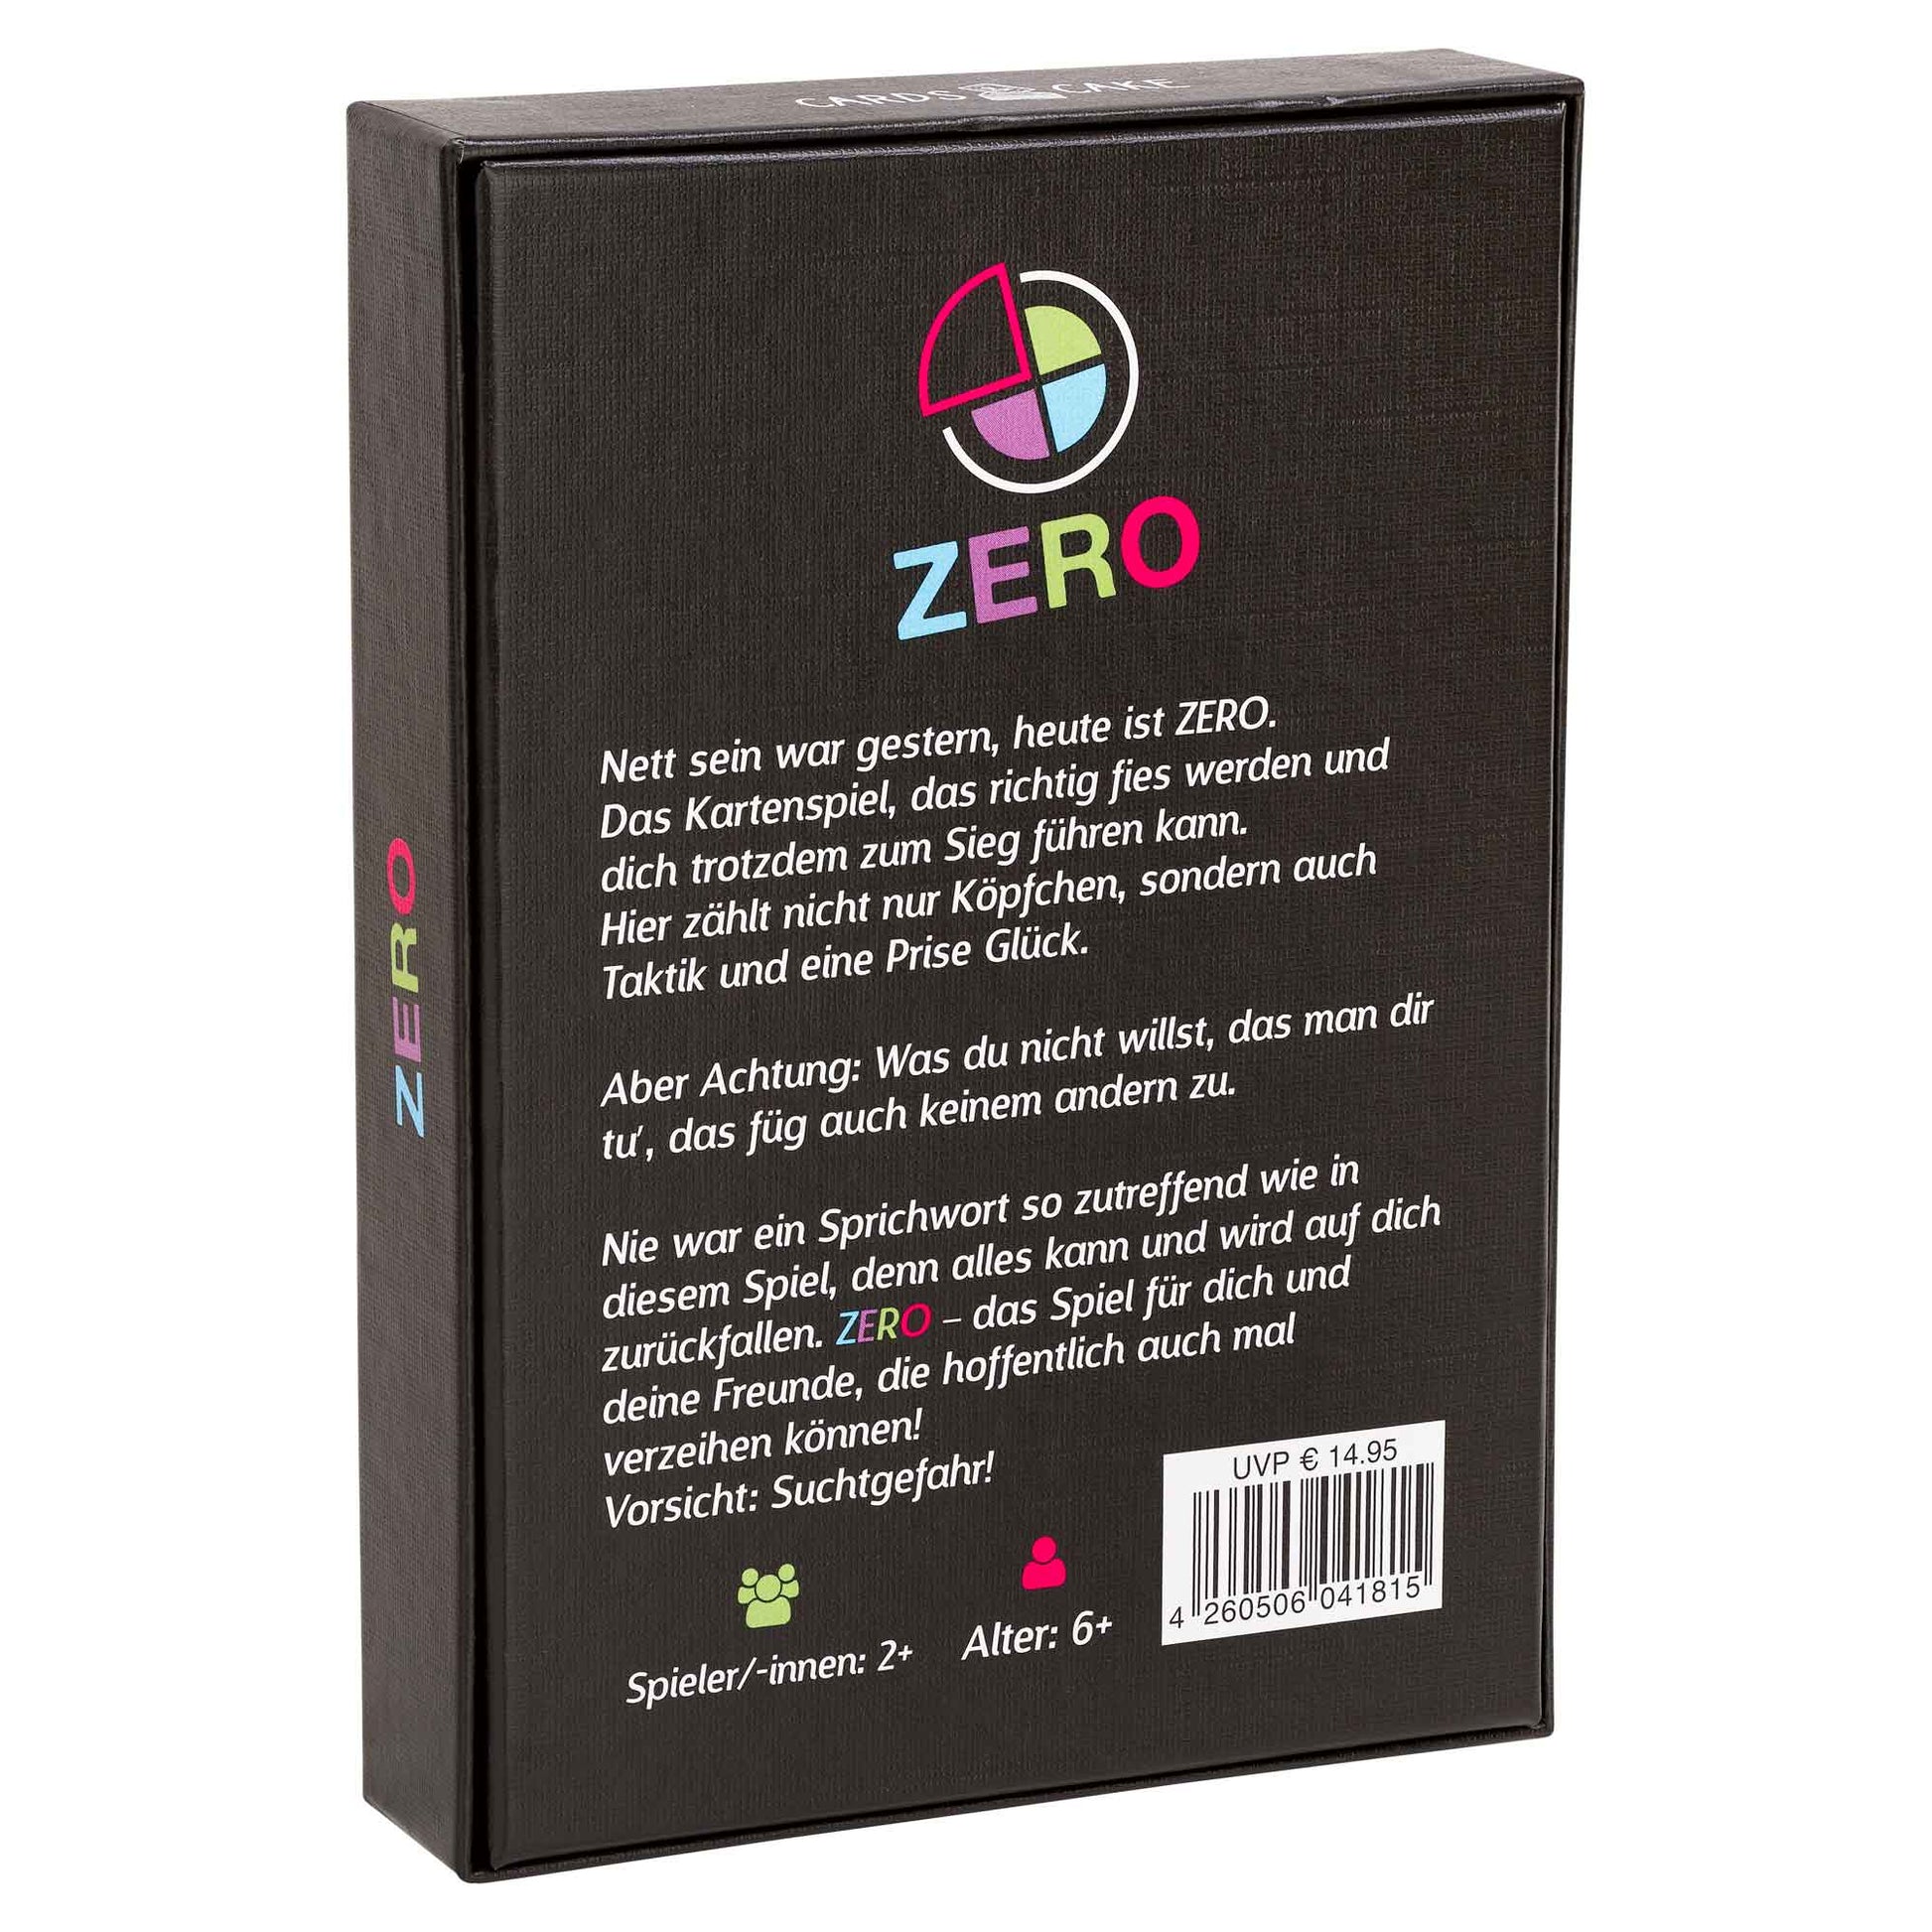 CARDS & CAKE Kartenspiel Zero - Cupcakes & Kisses